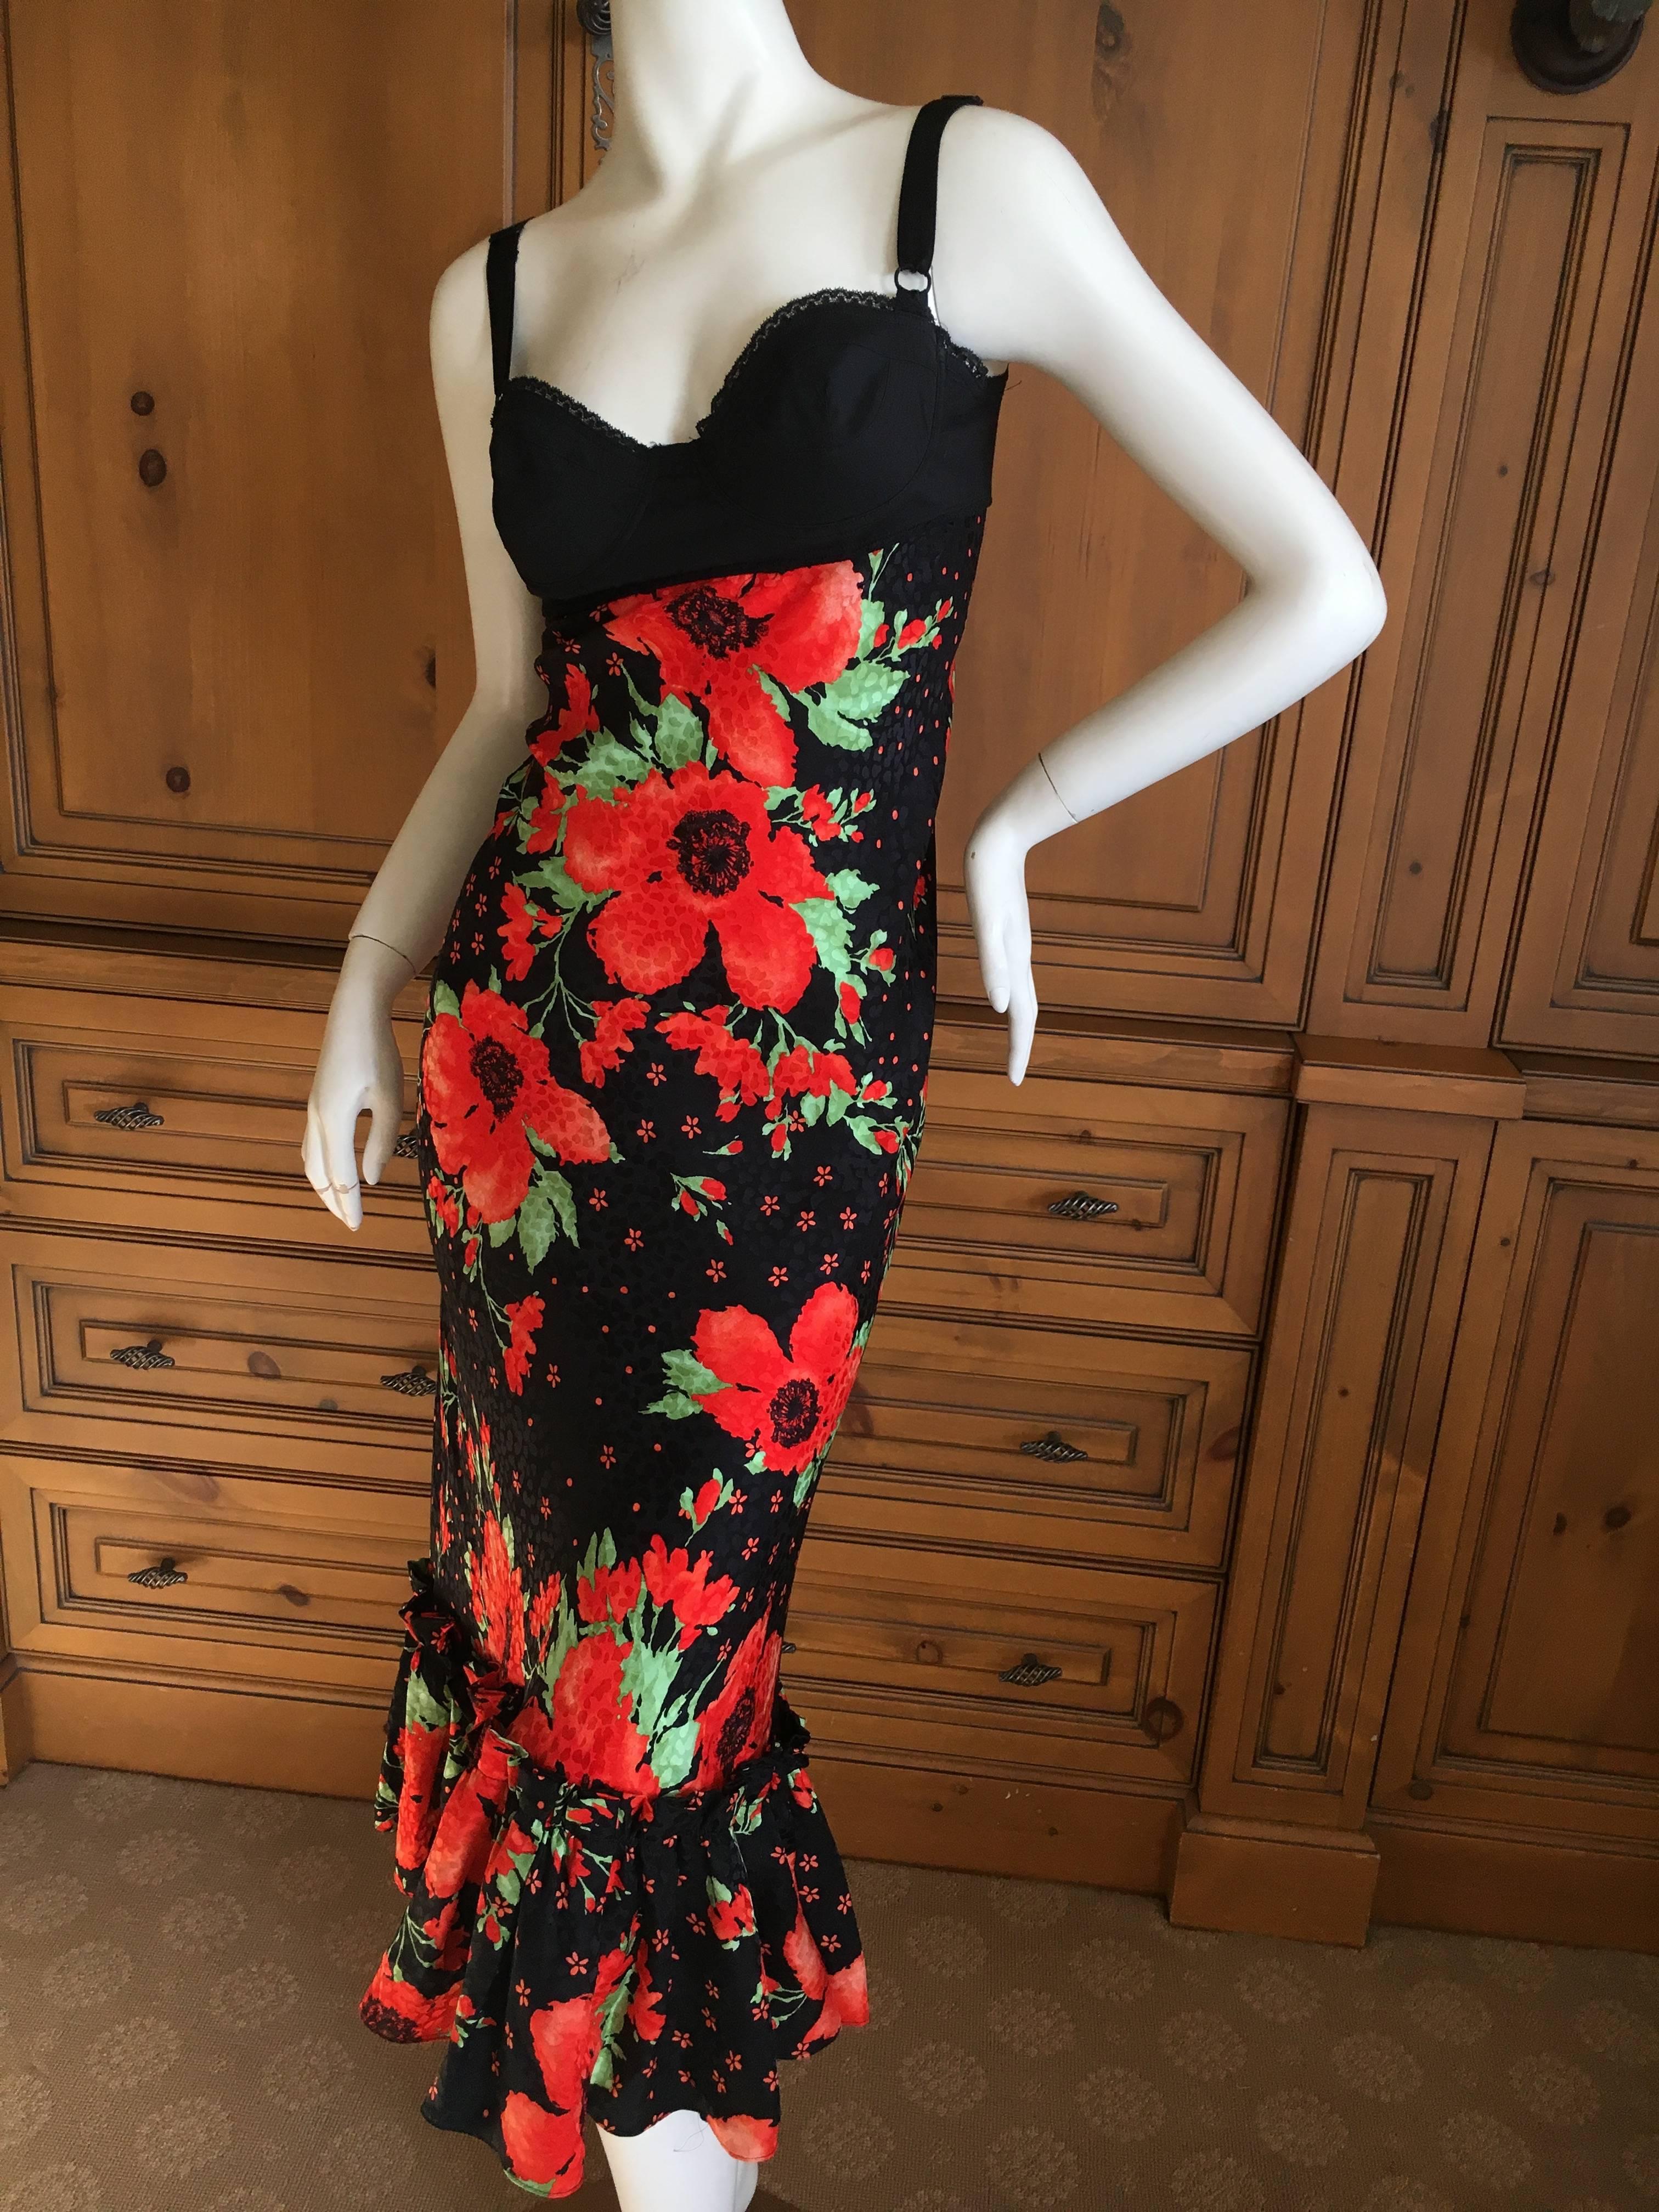 Charming D&G Dolce & Gabbana  Vintage Poppy Print Tea Length Dress wth Ruffle Hem.
Size 38
Bust 34